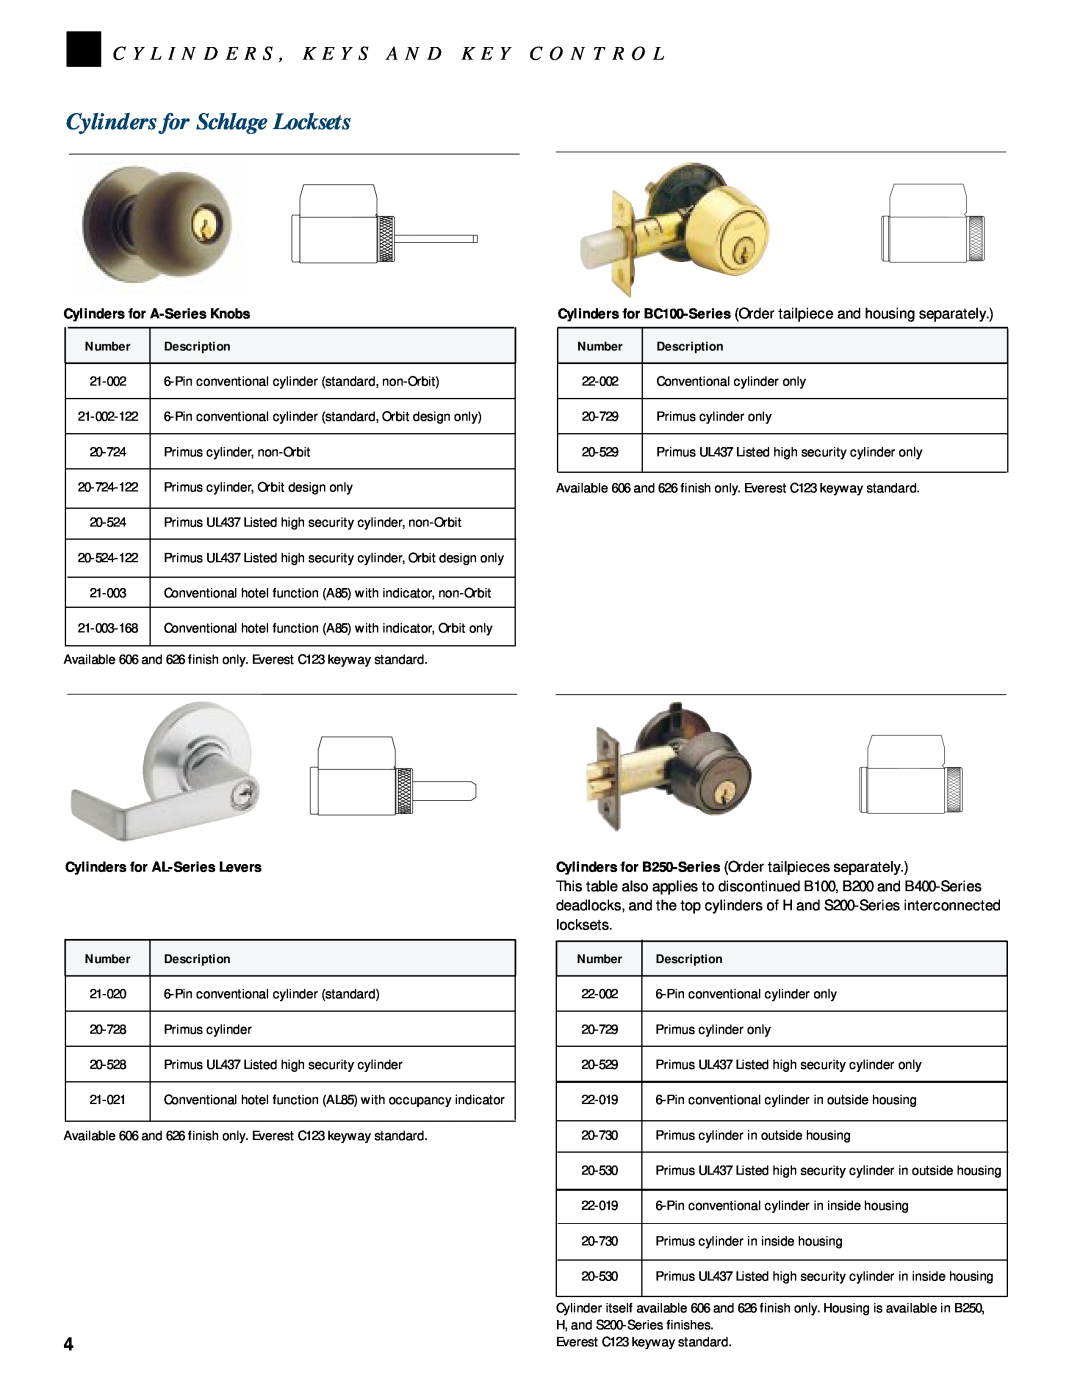 Schlage CYLINDERS manual Cylinders for Schlage Locksets, Cylinders for A-SeriesKnobs, Cylinders for AL-SeriesLevers 